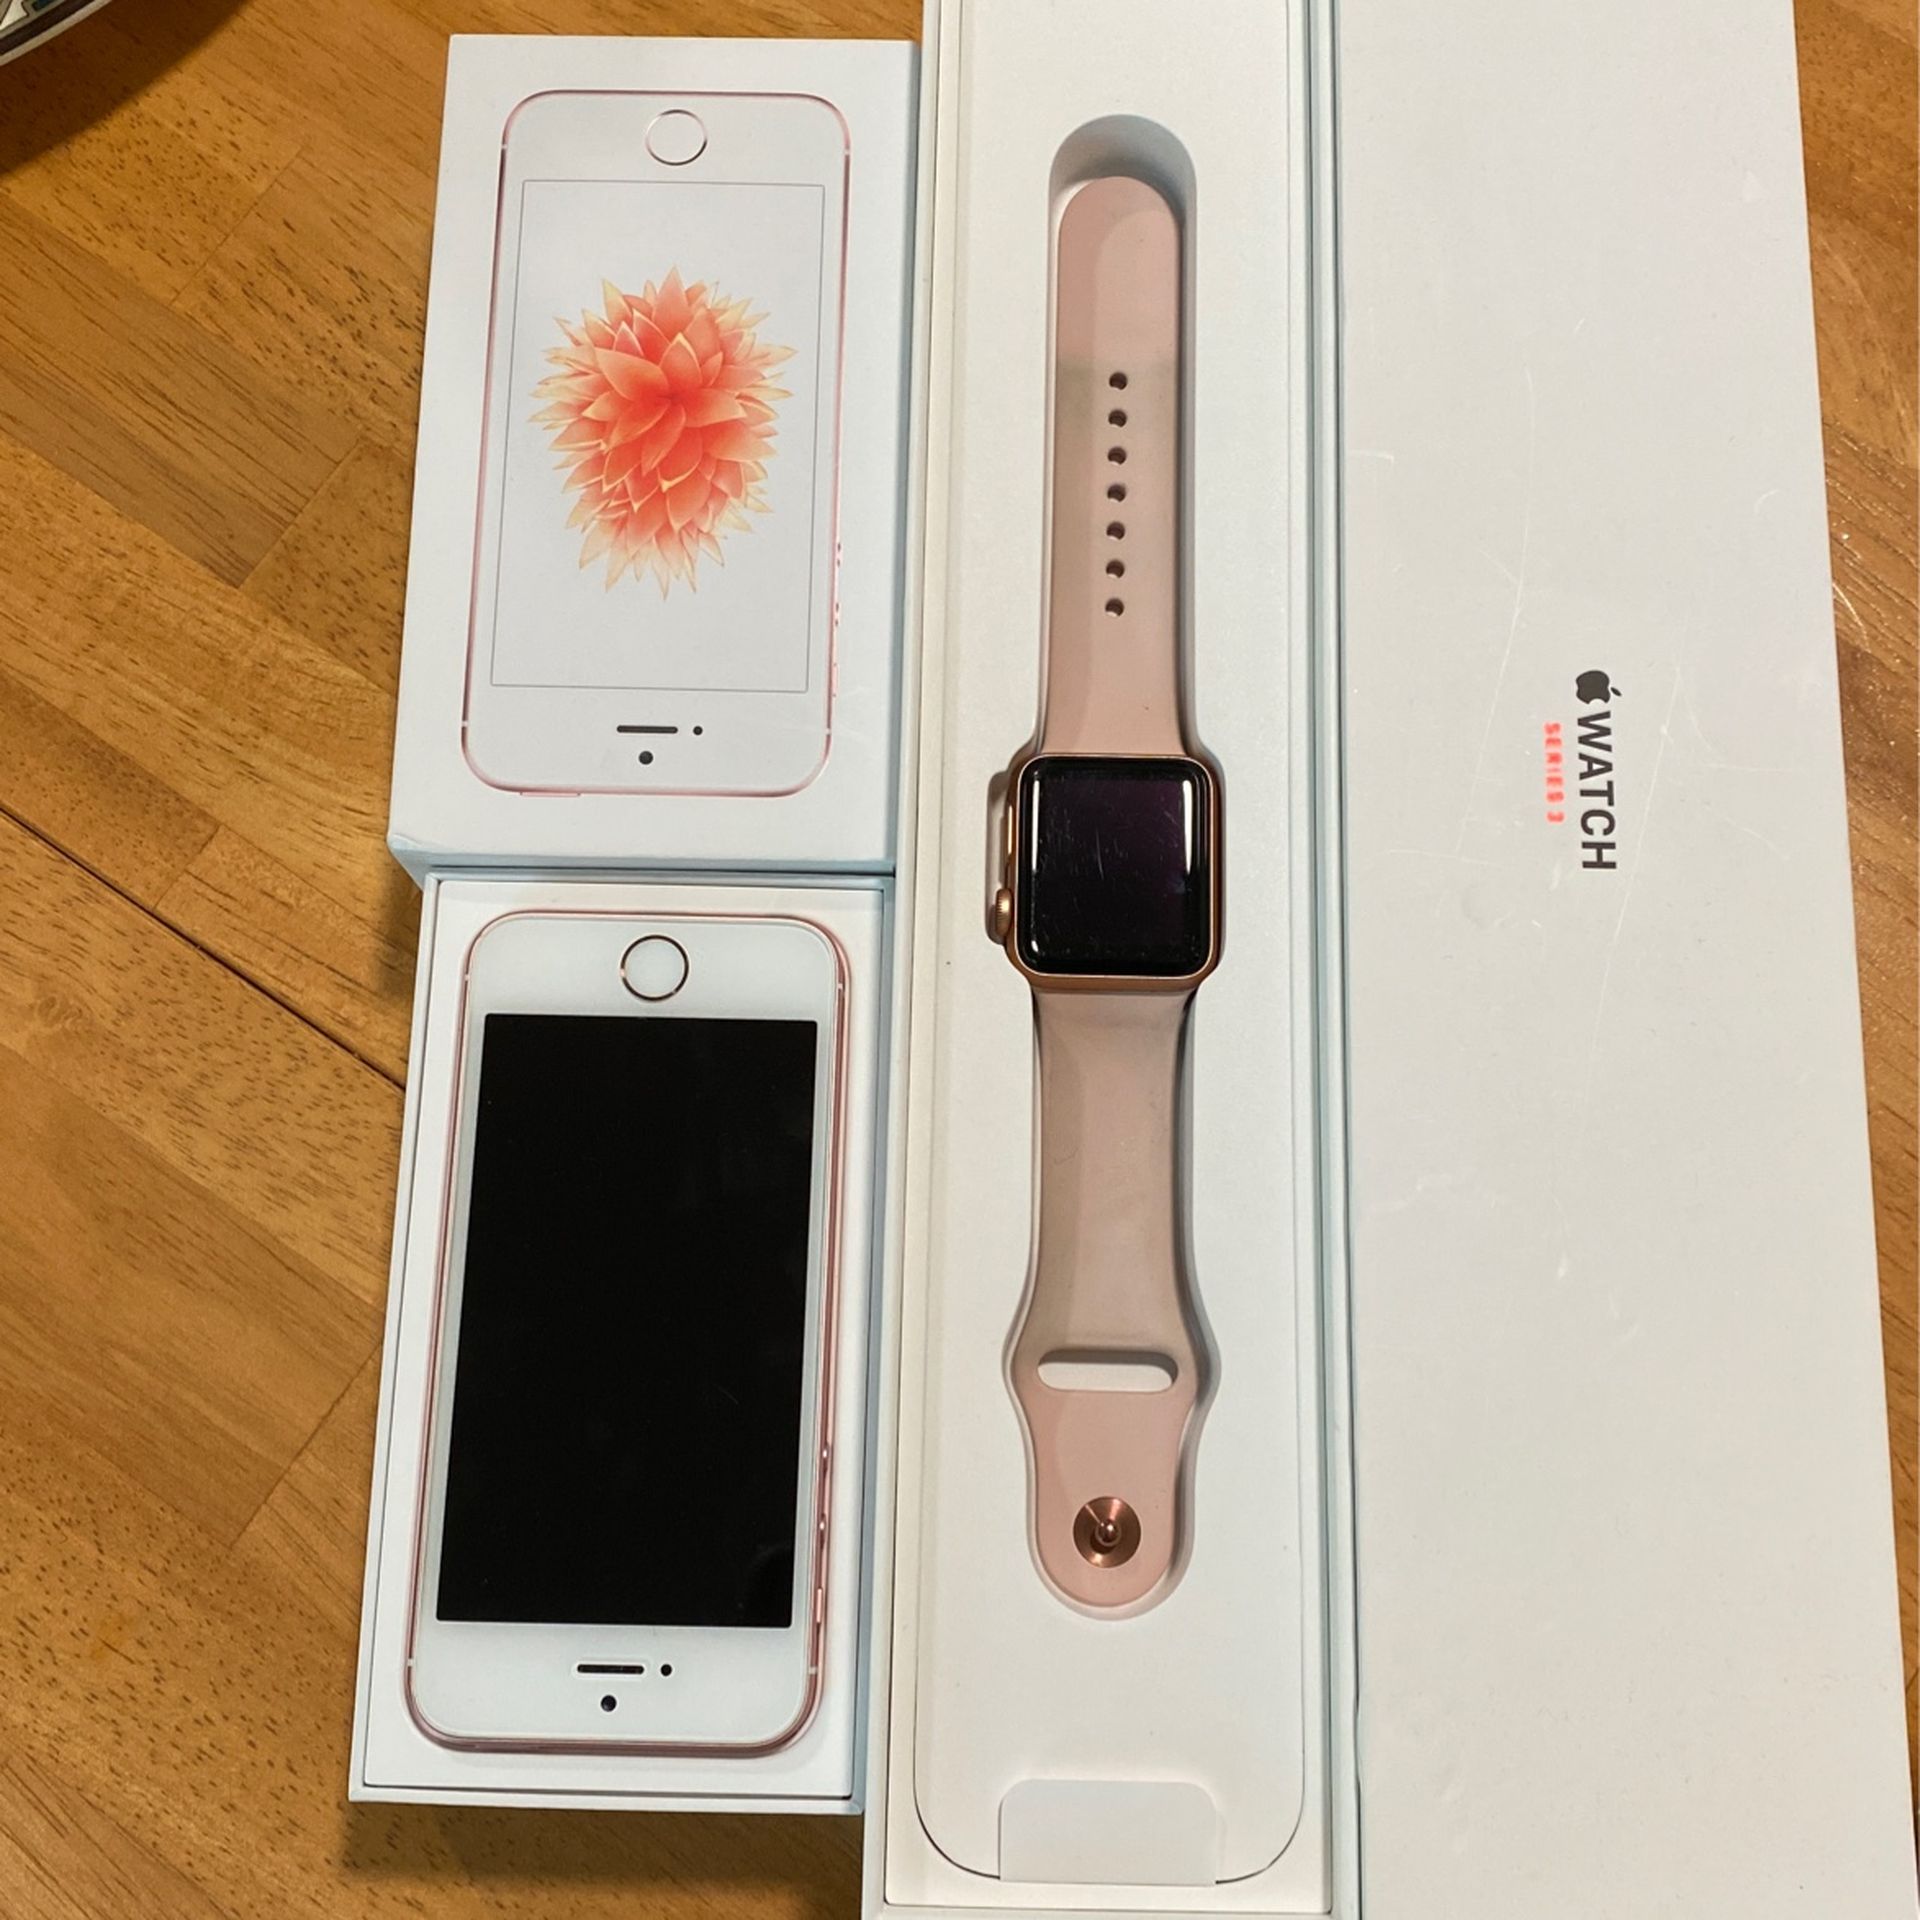 IPhone & Apple Watch